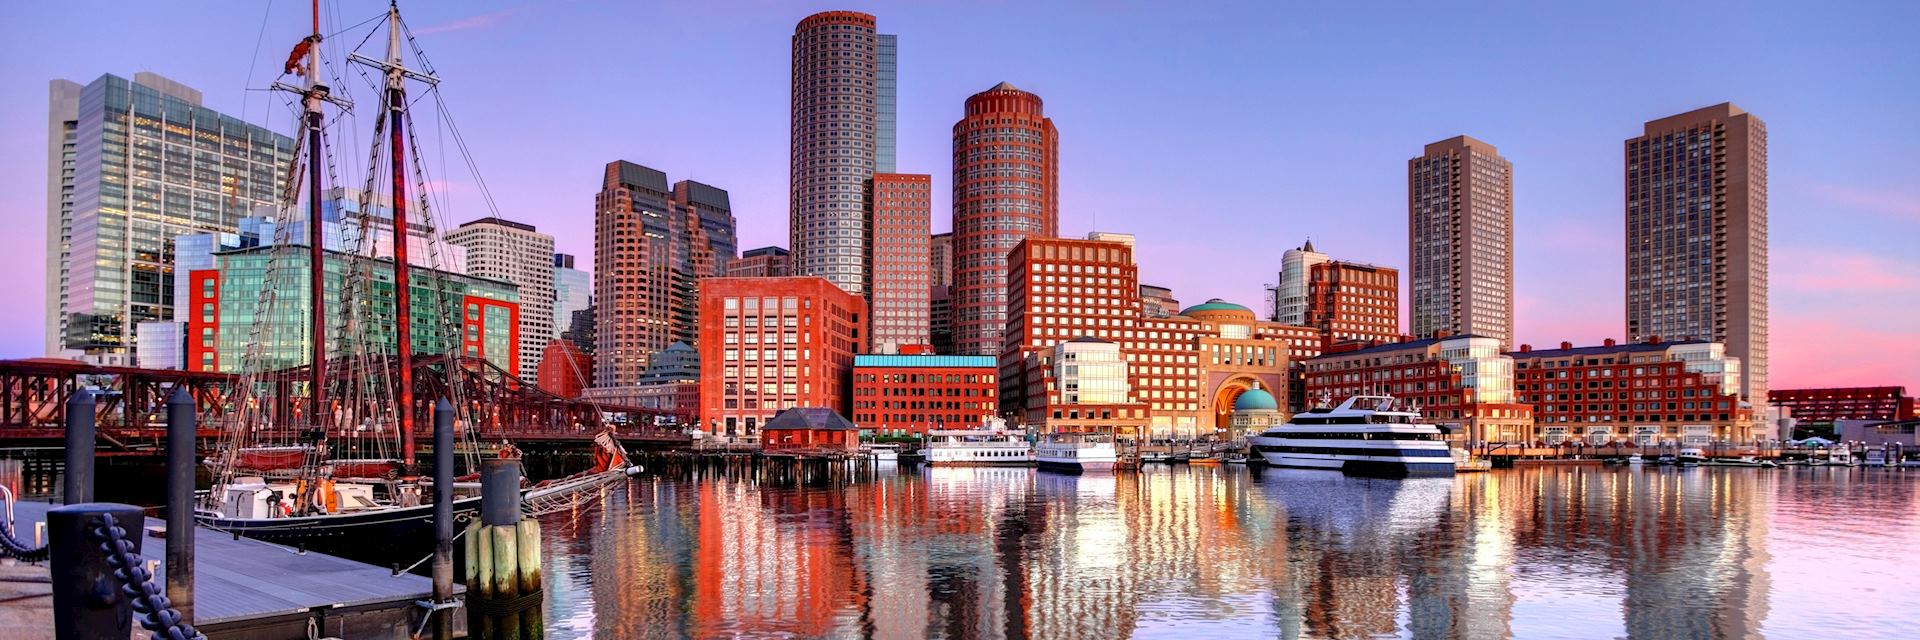 Boston Harbor, Massachusetts